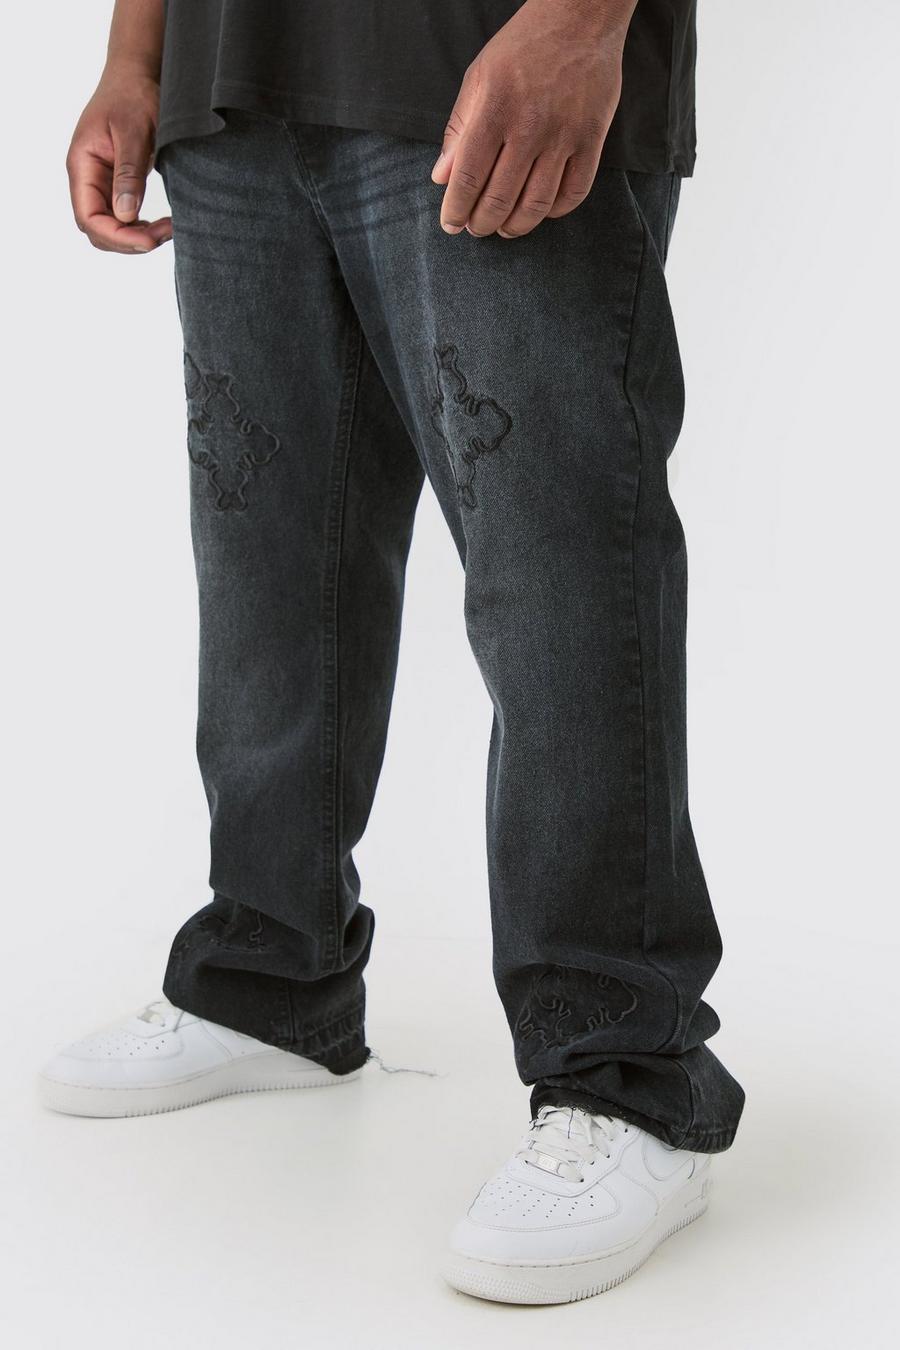 Jeans Plus Size Slim Fit in denim rigido con applique a croce, Washed black